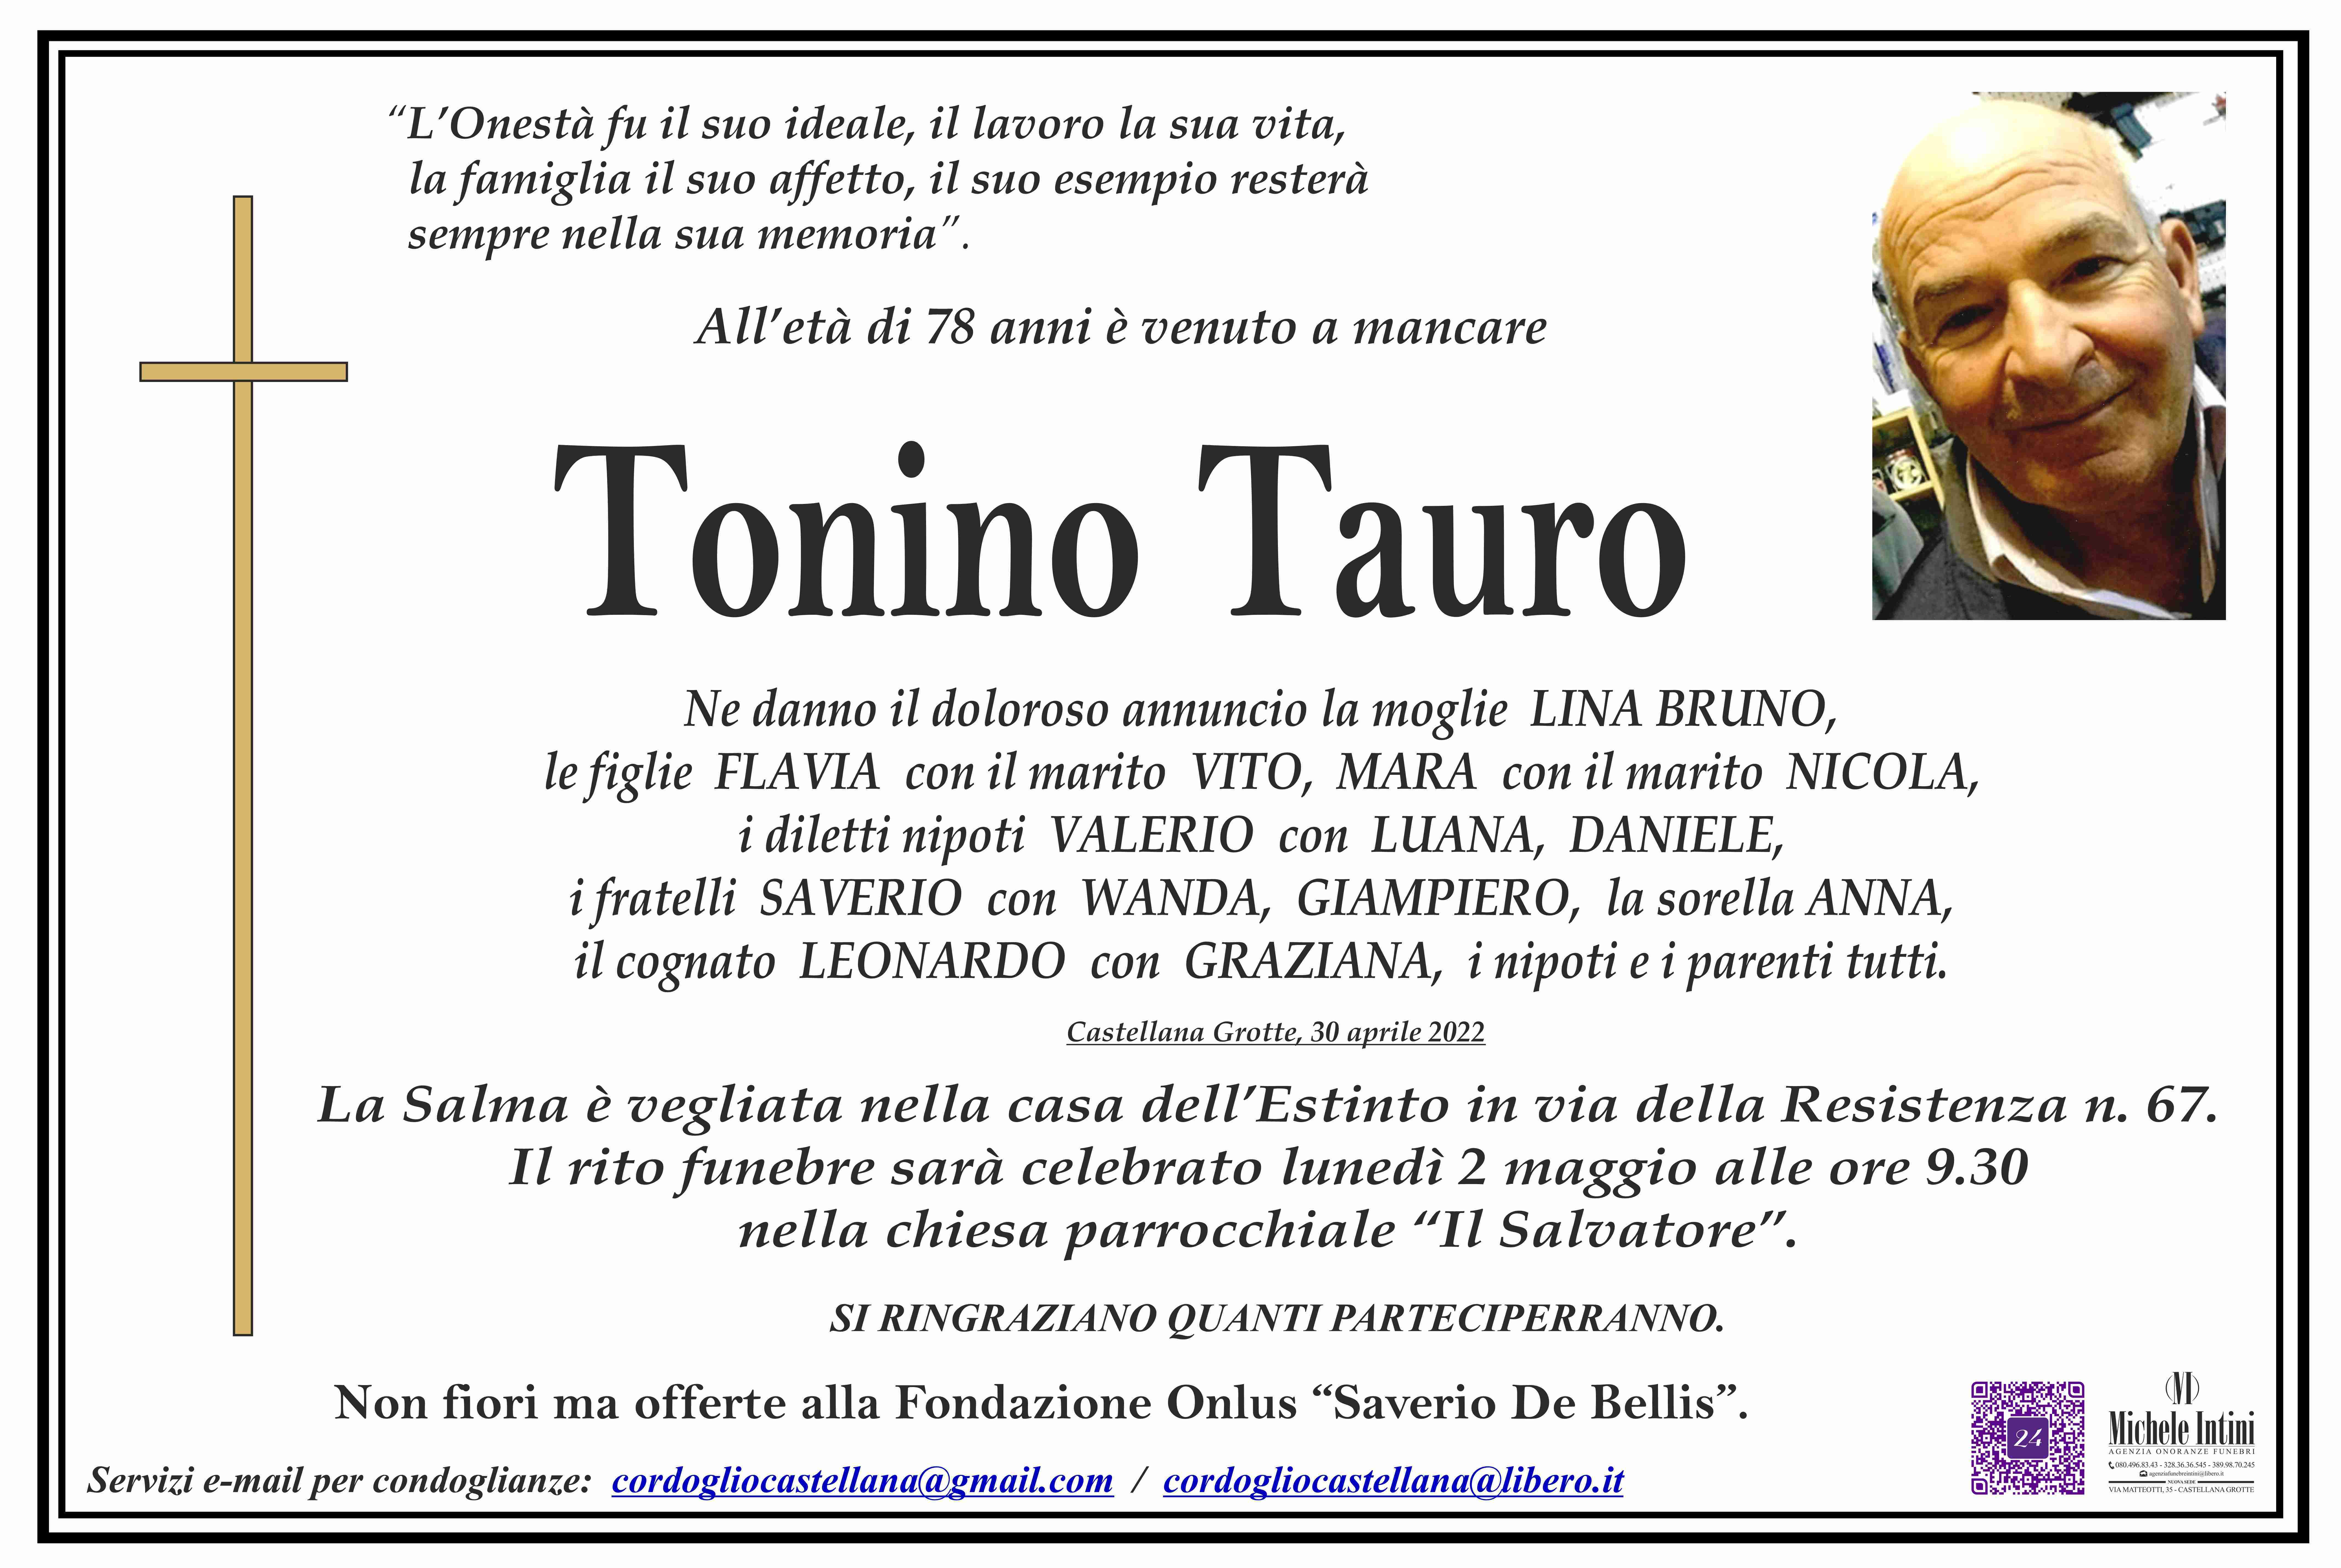 Tonino Tauro